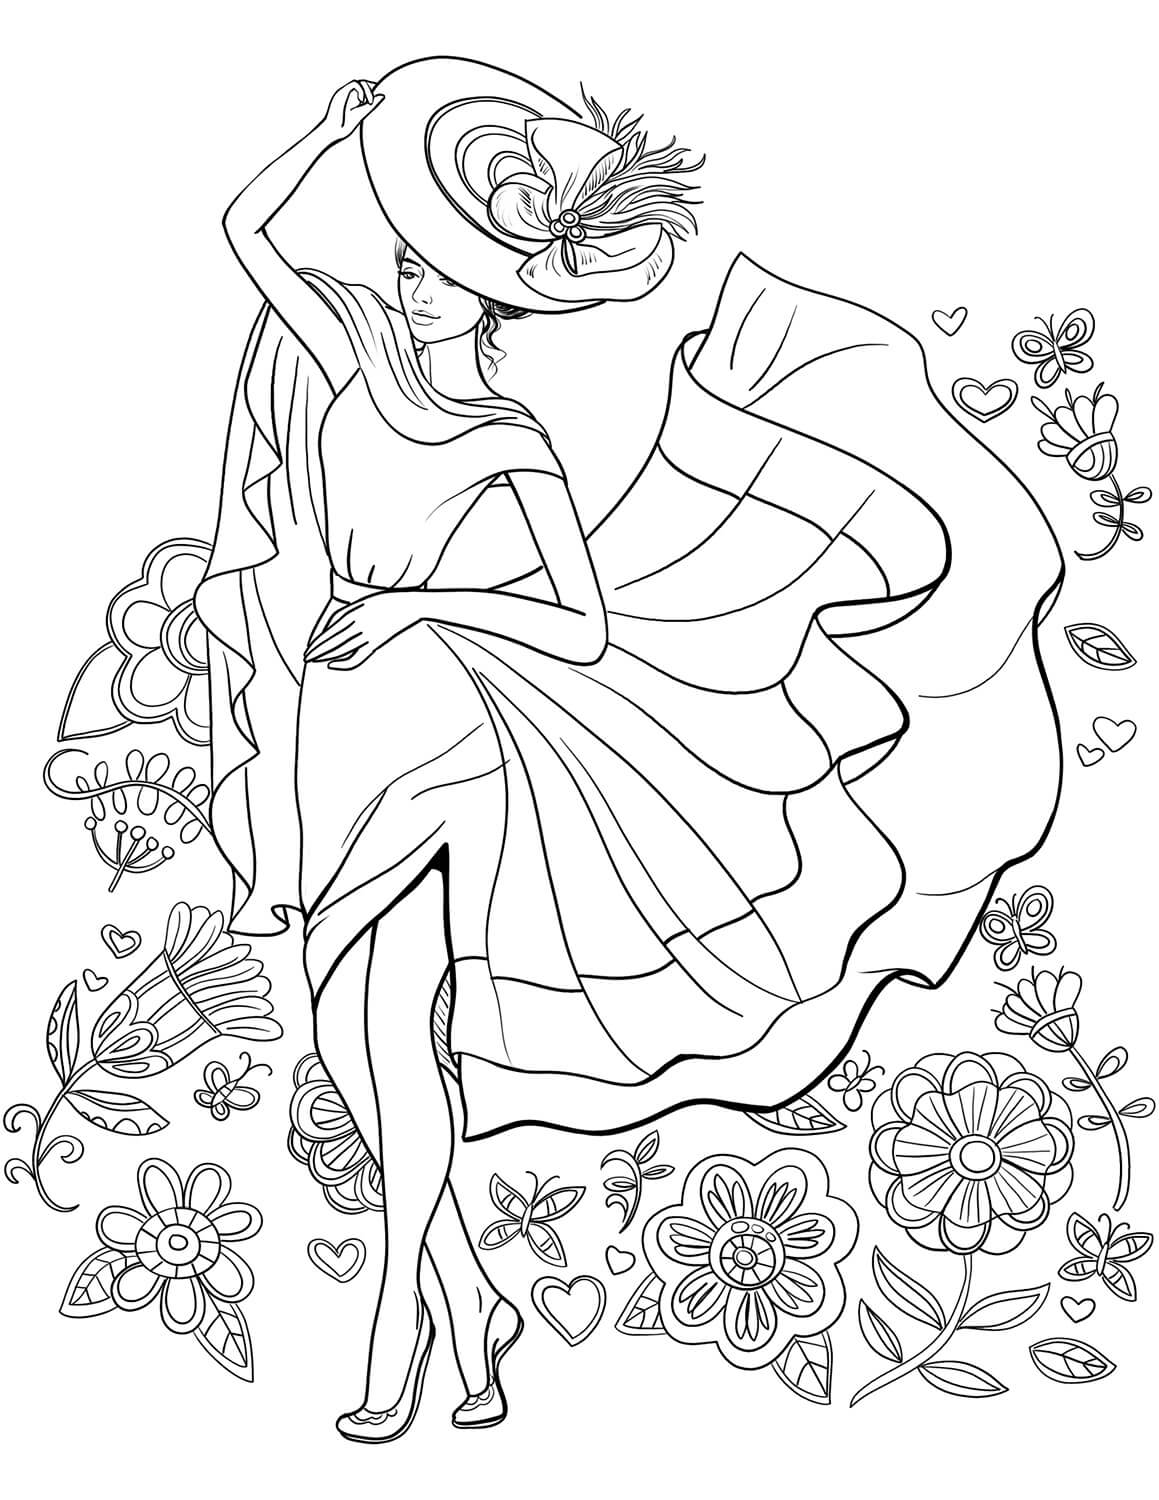 Desenhos de Linda menina Adolescente com Flores para colorir